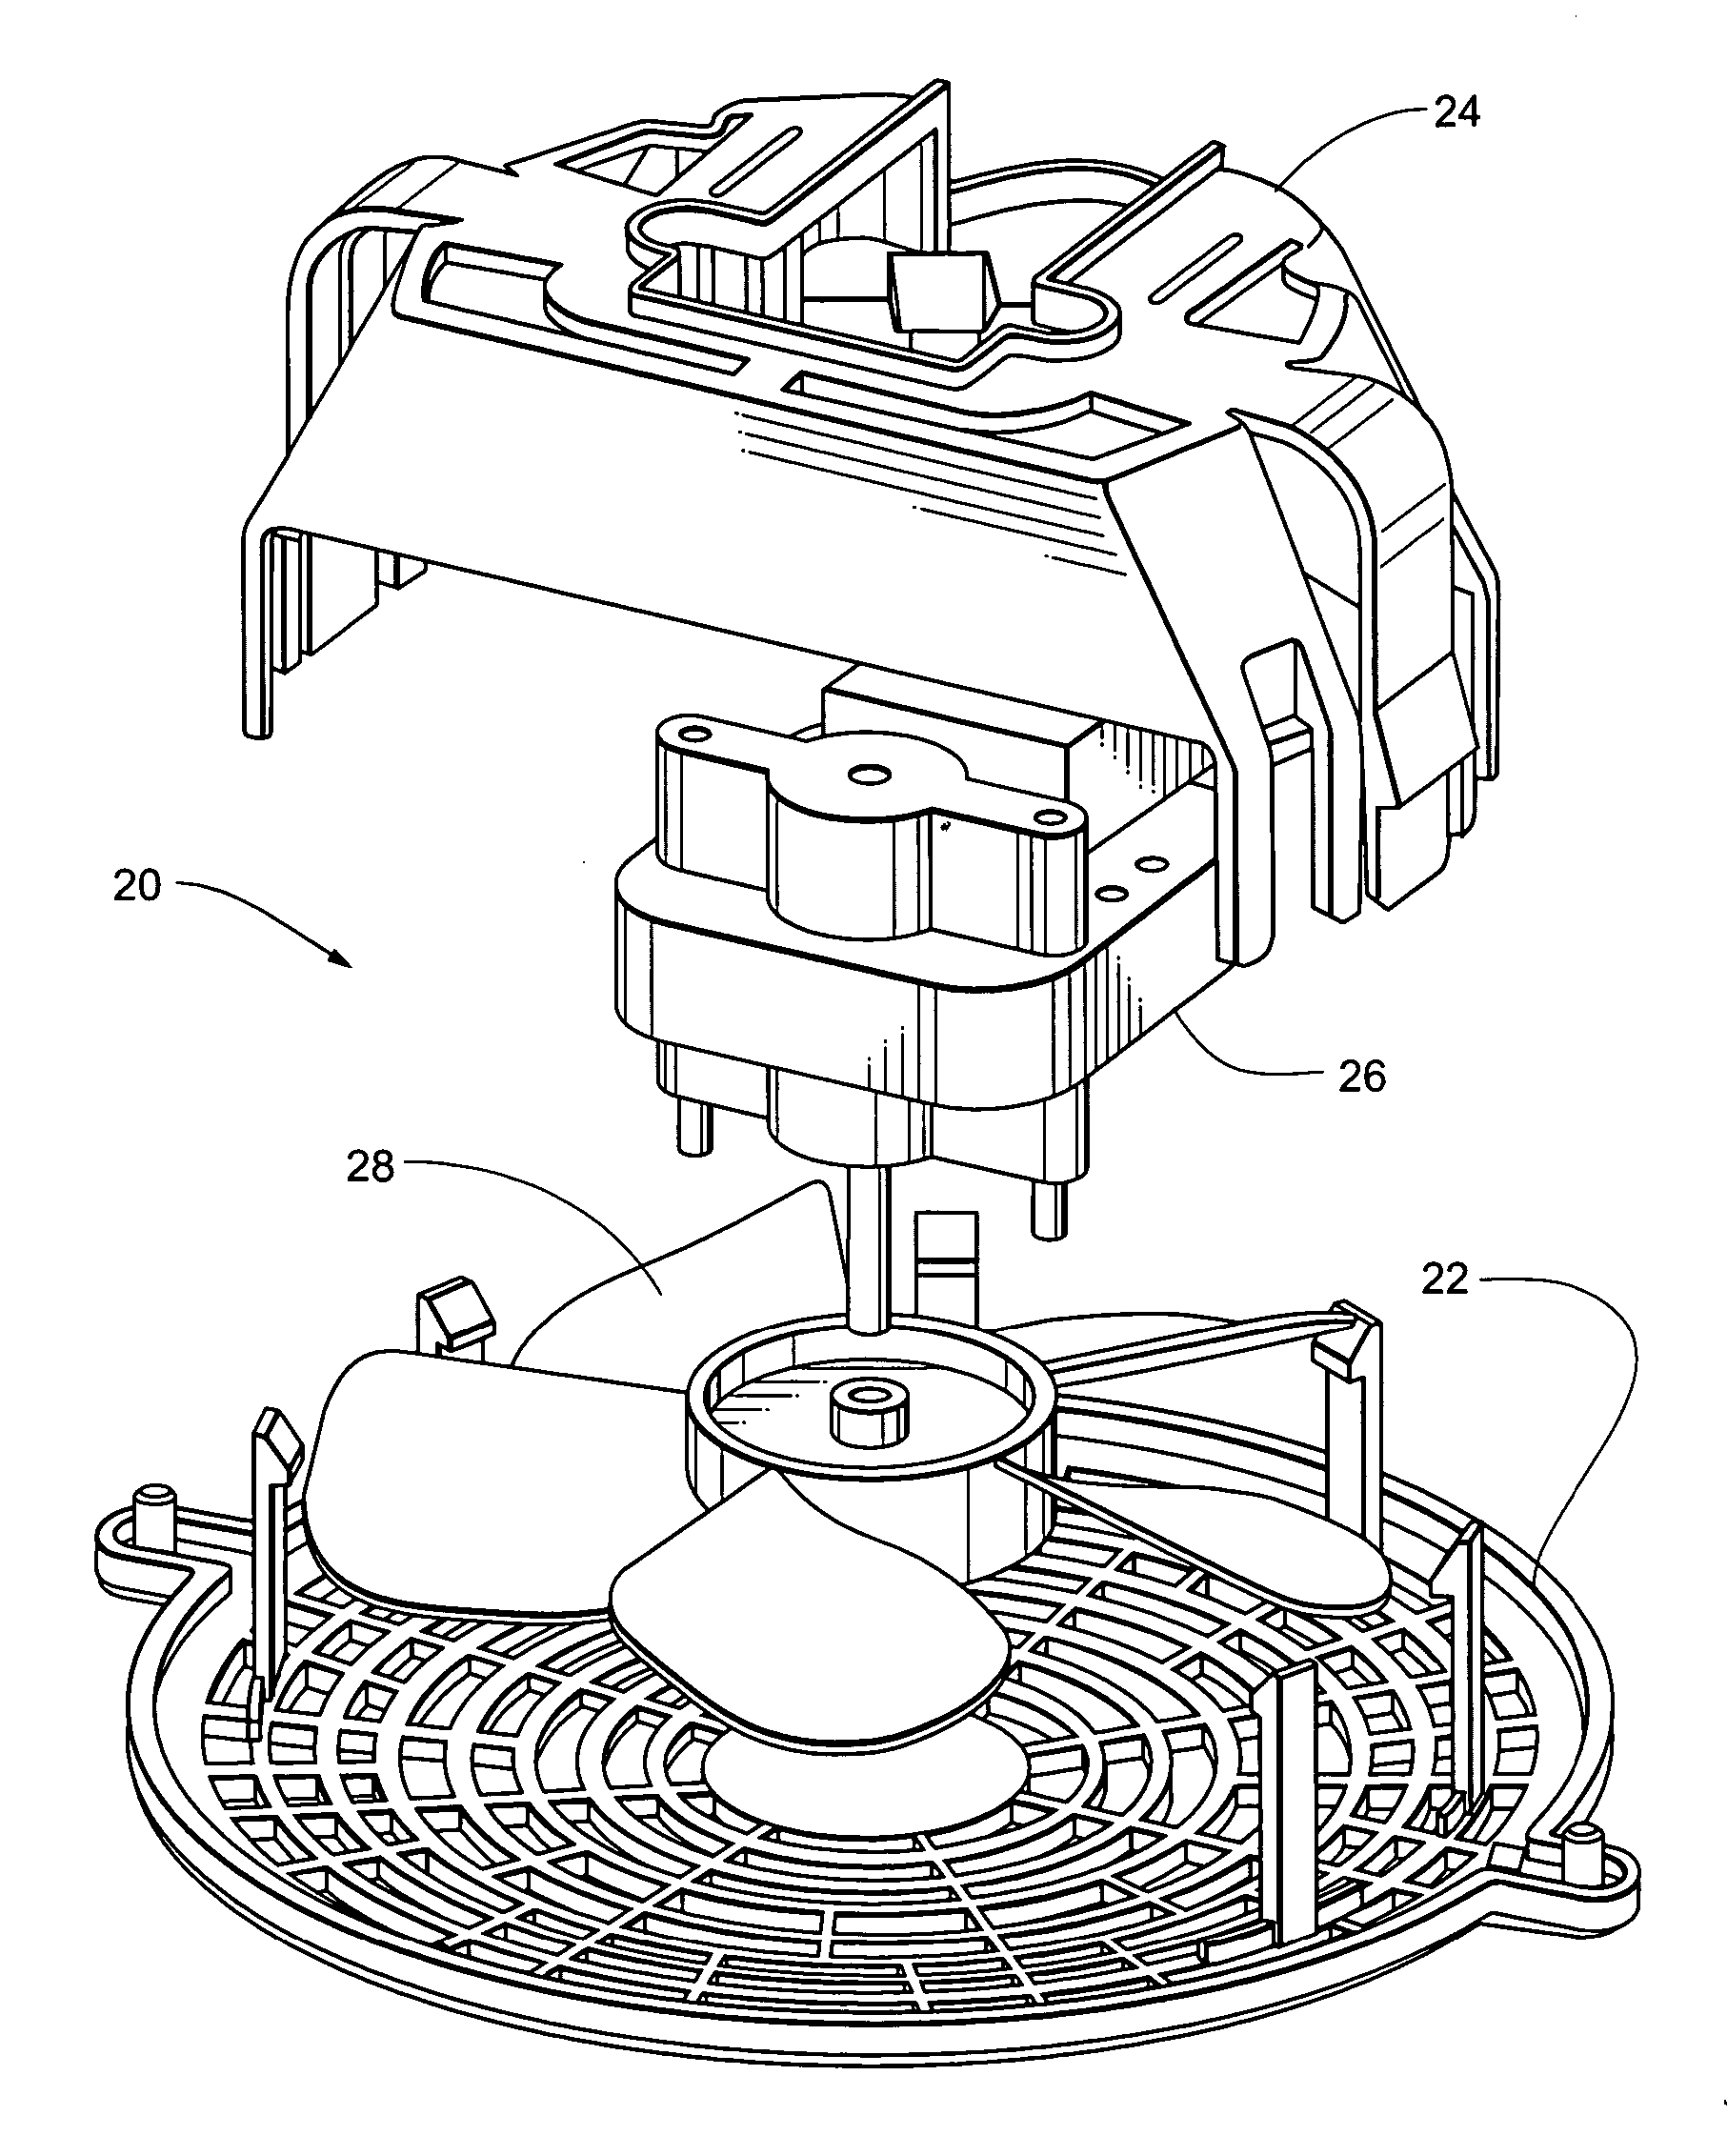 Unitary fan-motor grill assembly